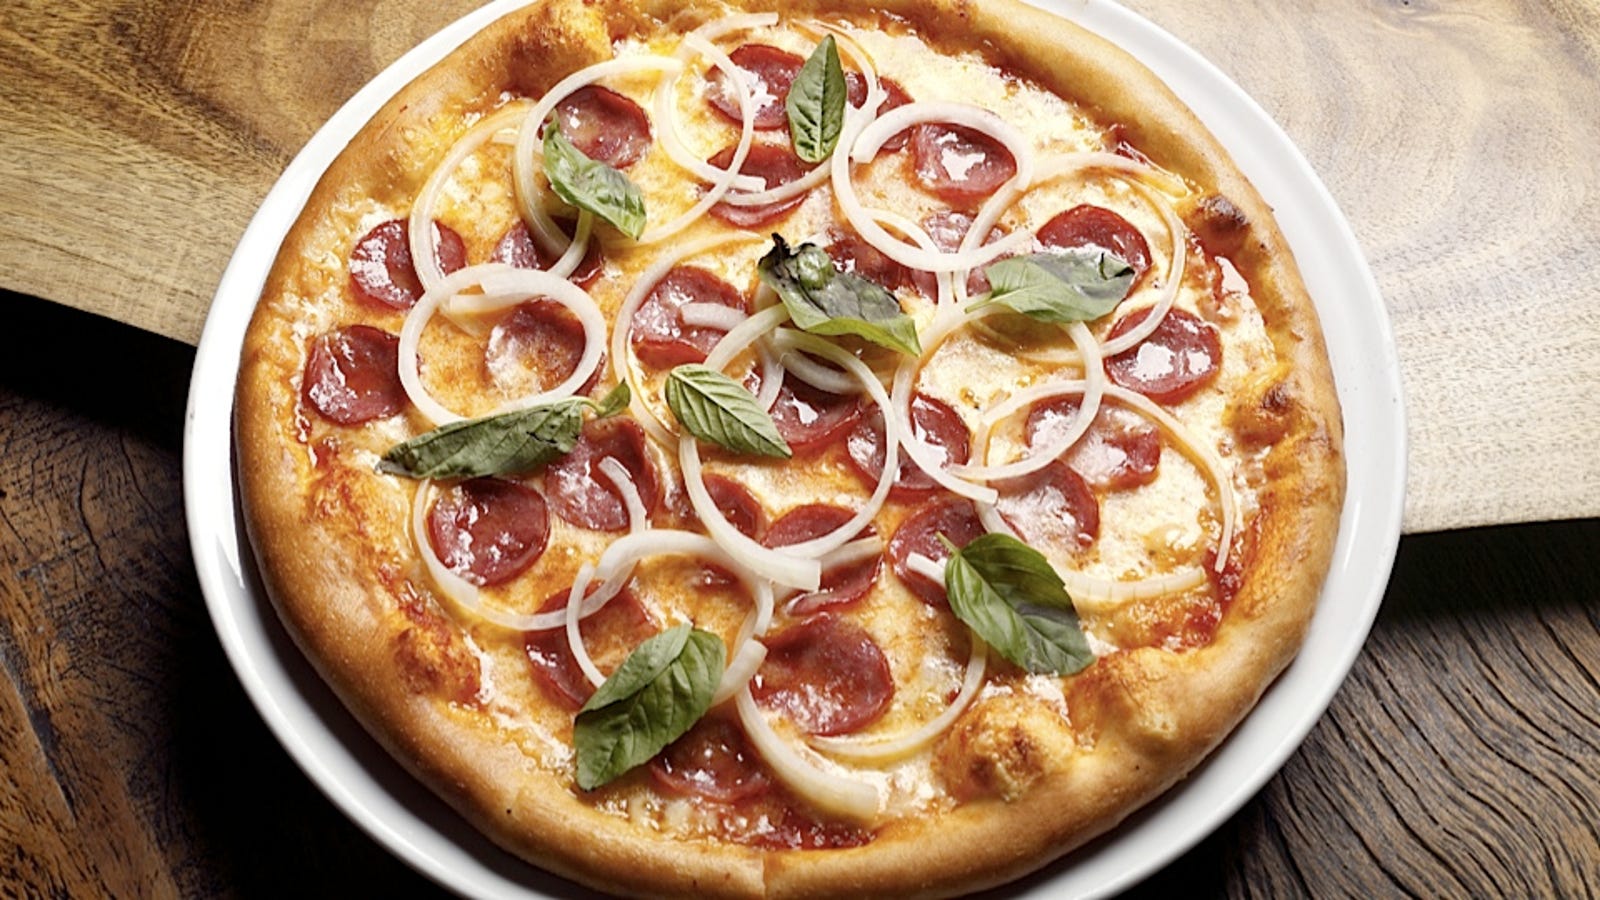 RealLife Mystic Pizza May Soon Serve Its Last Slice